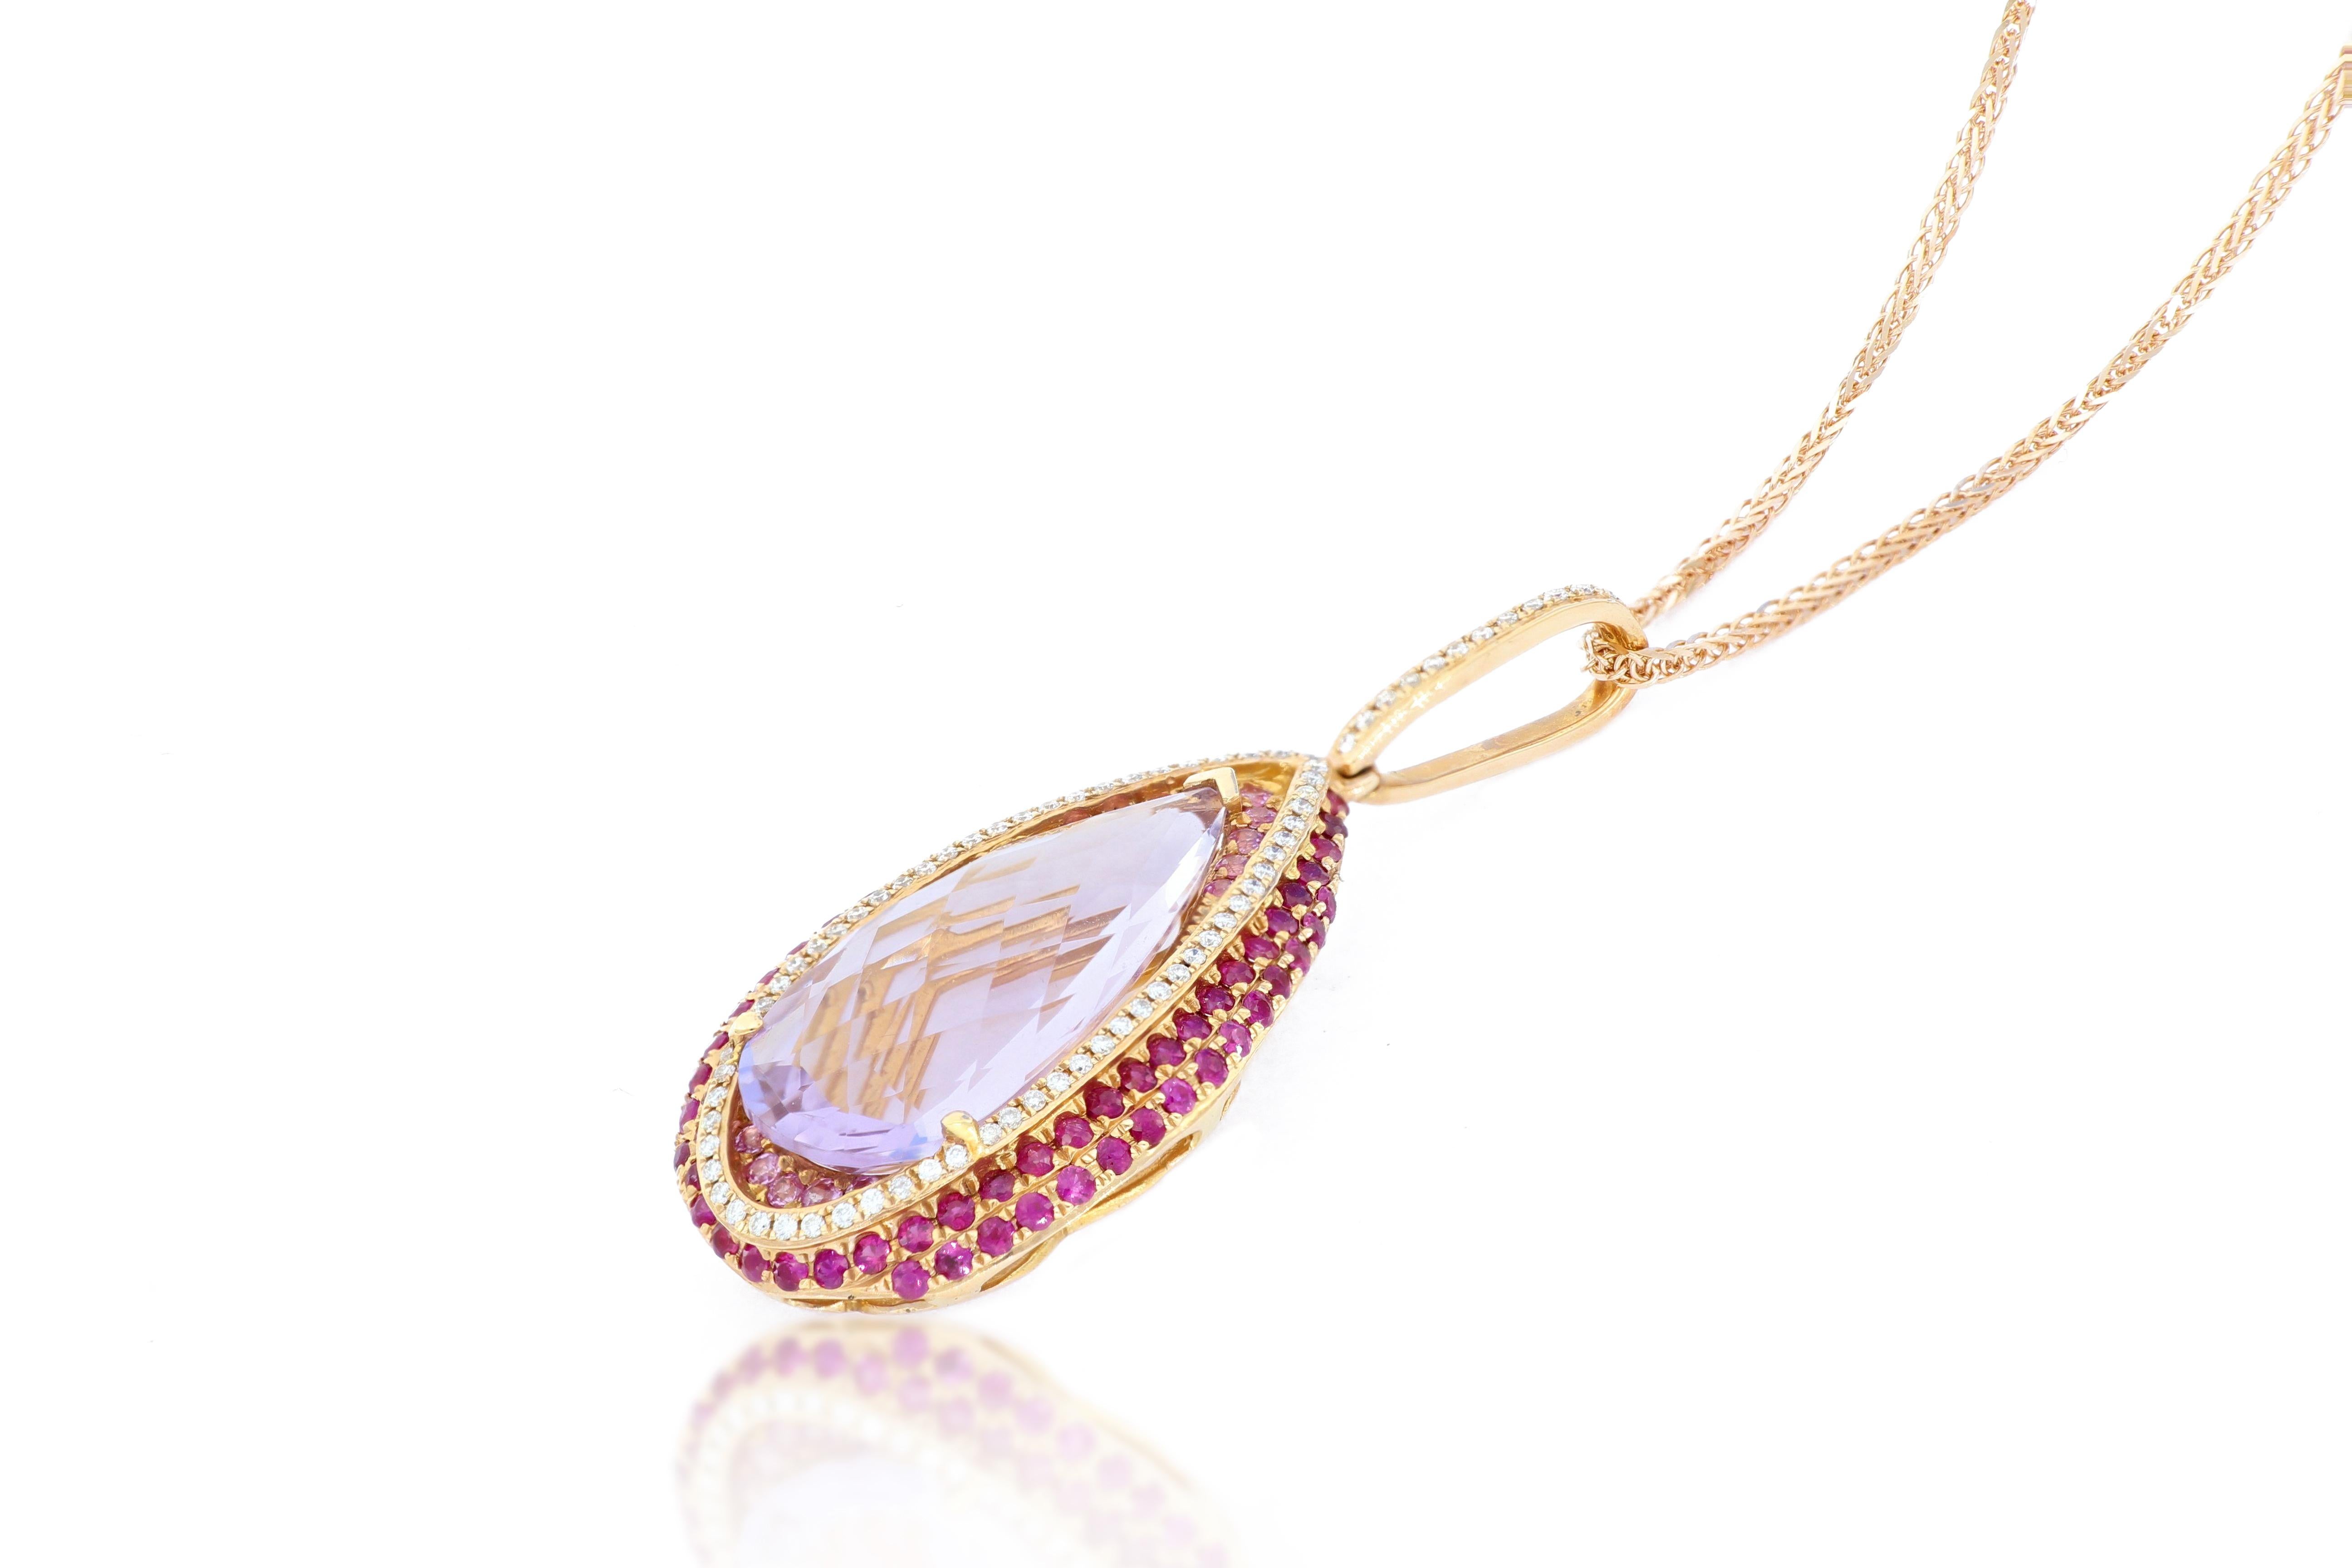 Brilliant Cut 18 Karat Gold Amethyst Pendant with Necklace For Sale